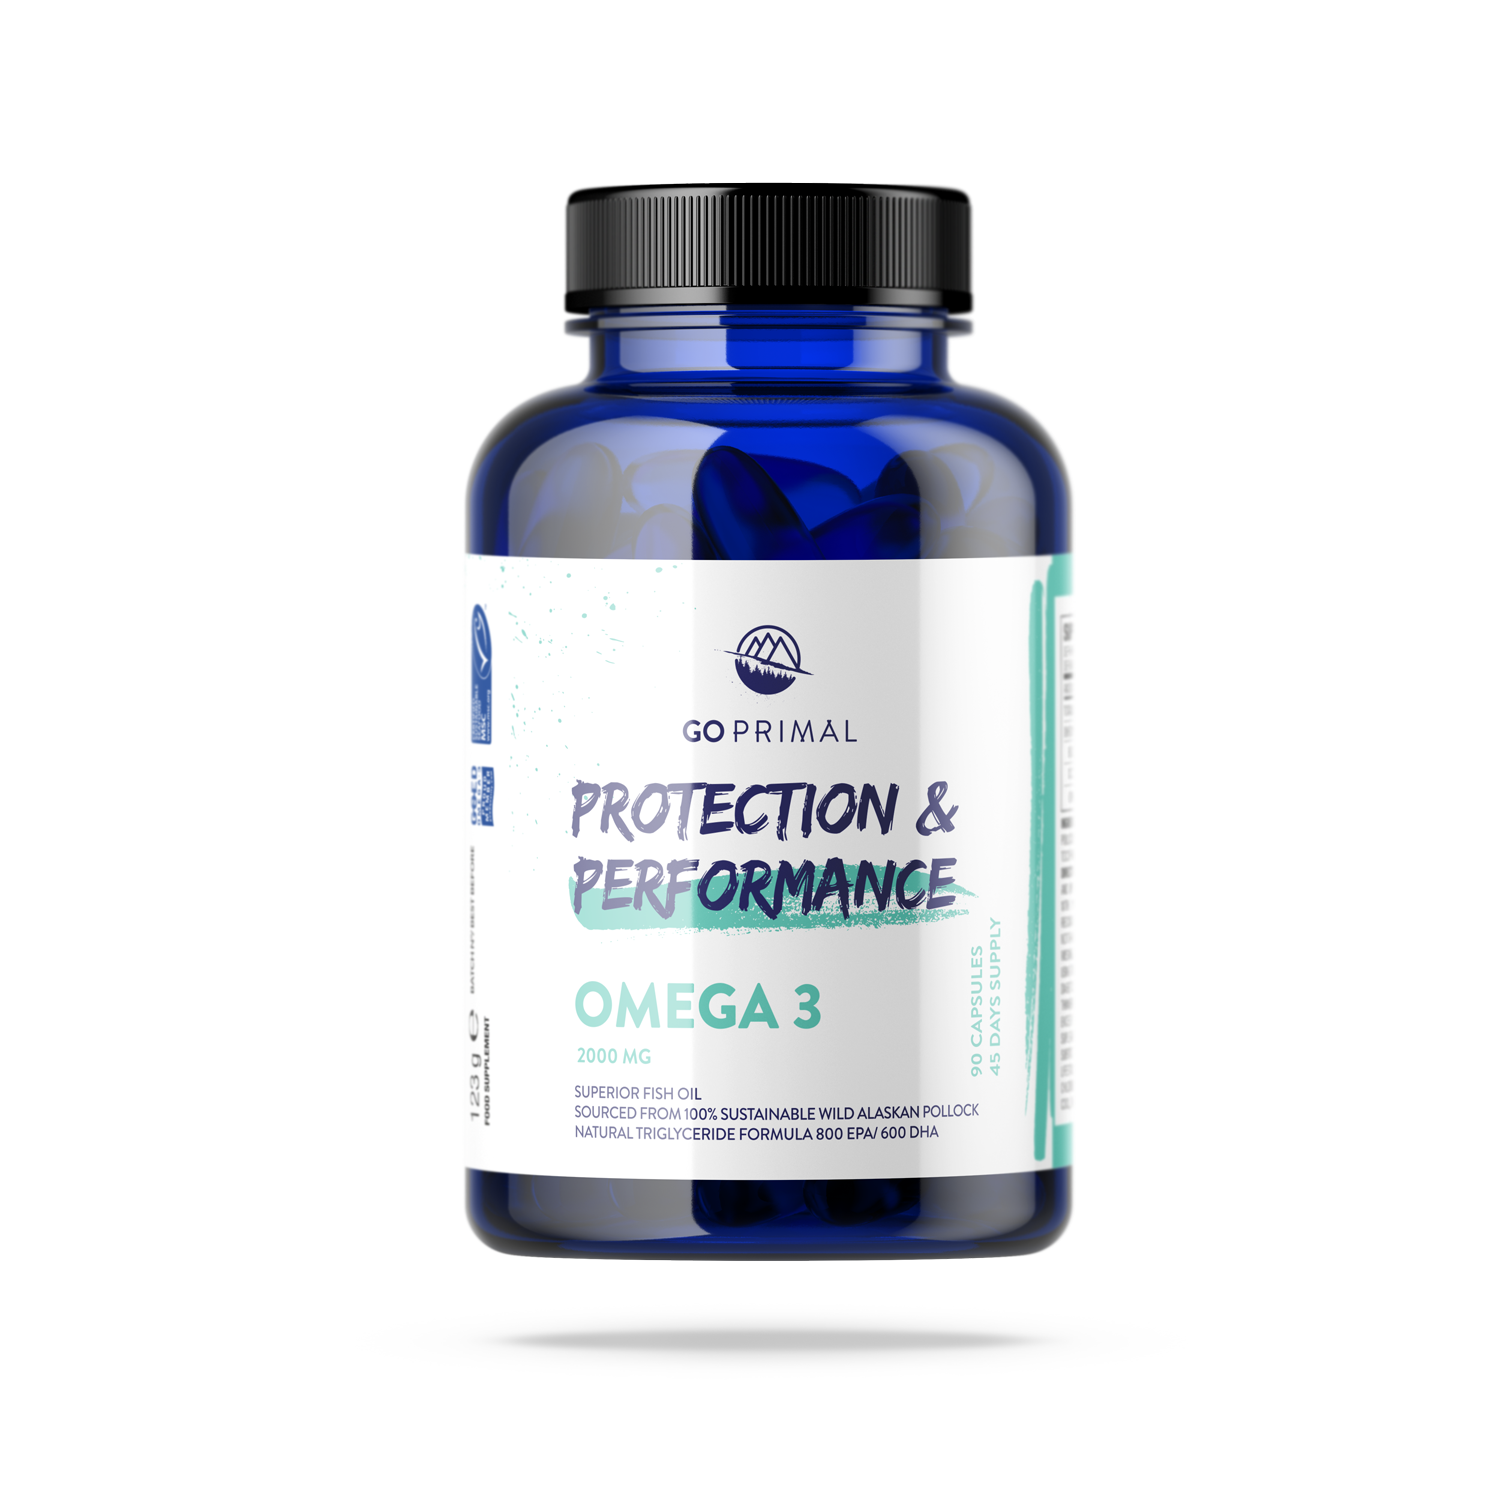 GoPrimal Omega 3 Proteccion & Performance (90 Cápsulas)